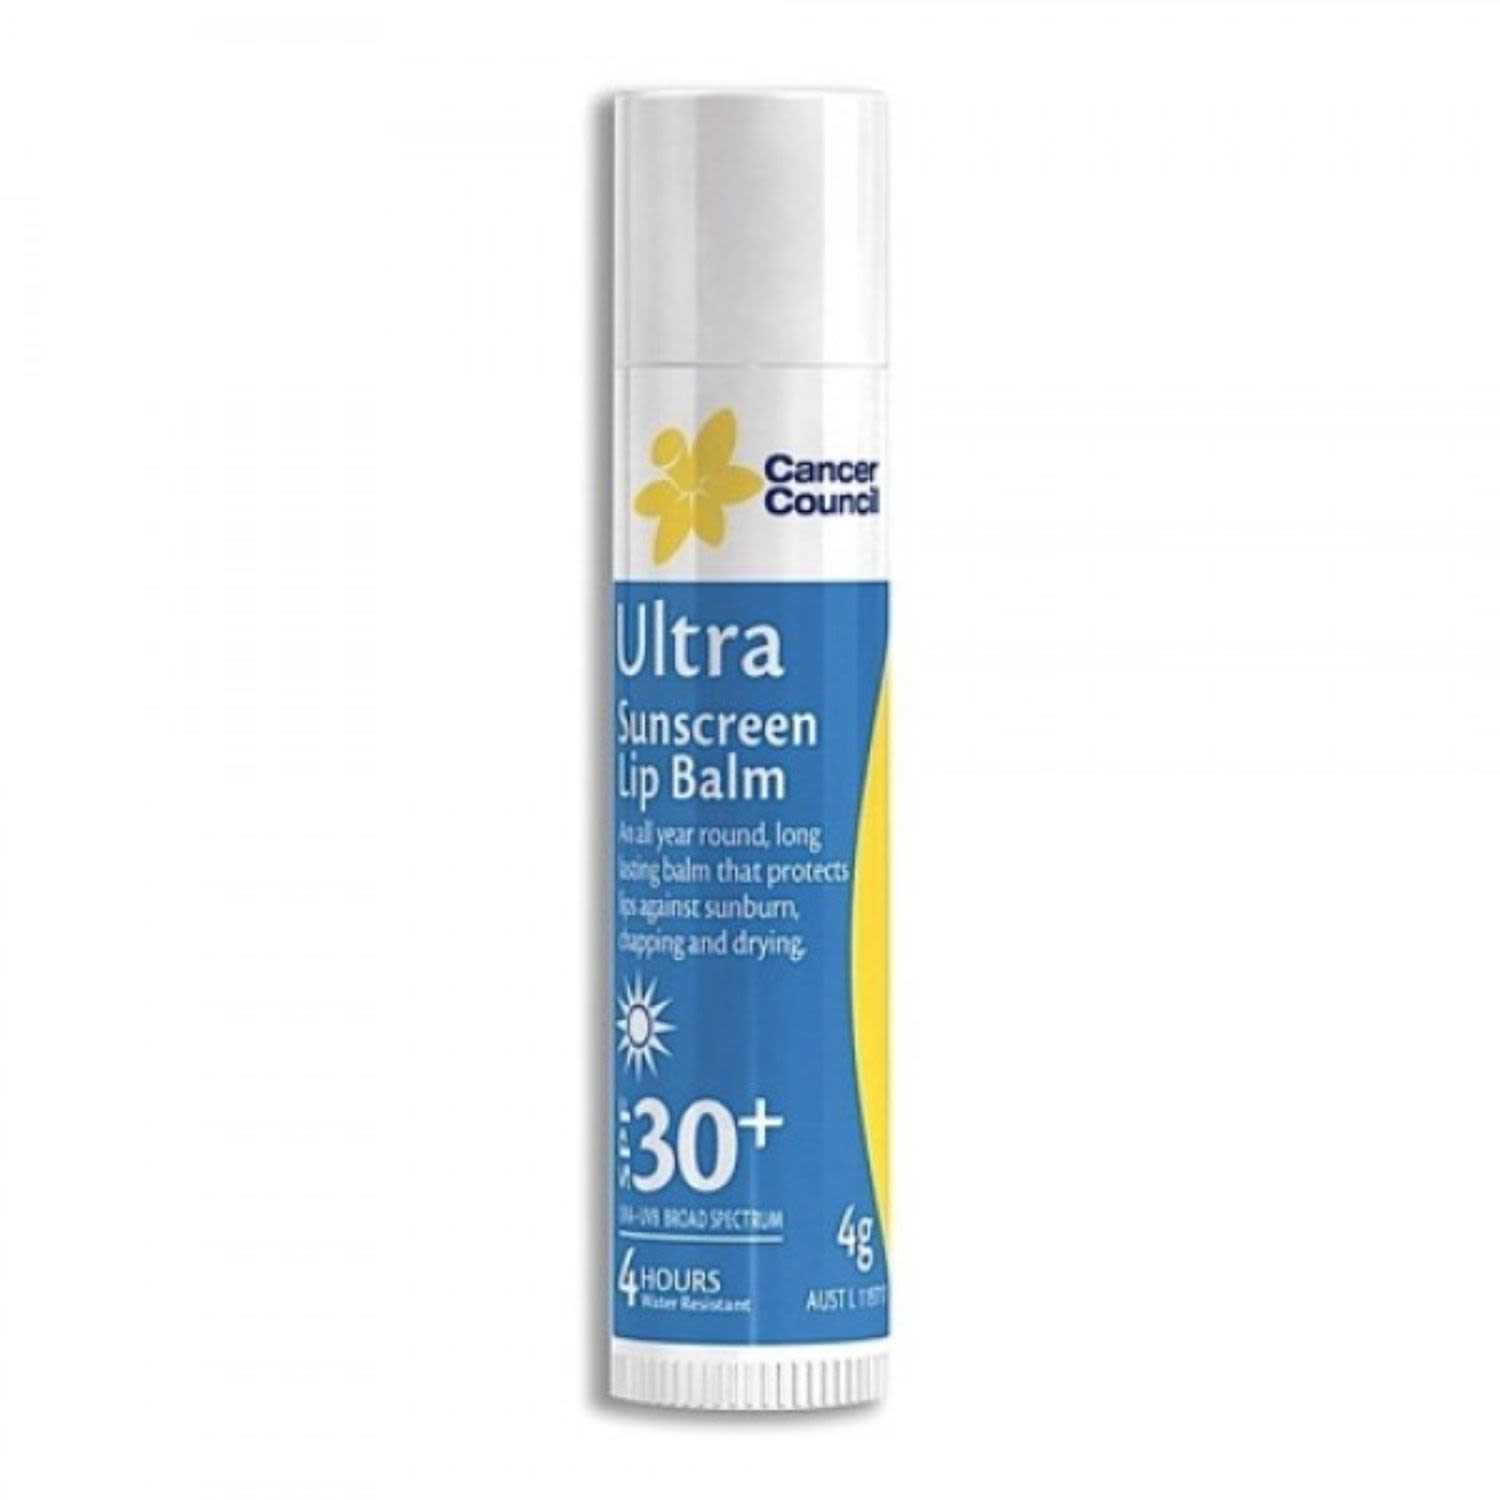 Cancer Council Ultra Sunscreen Lip Balm SPF30+, 4 Gram